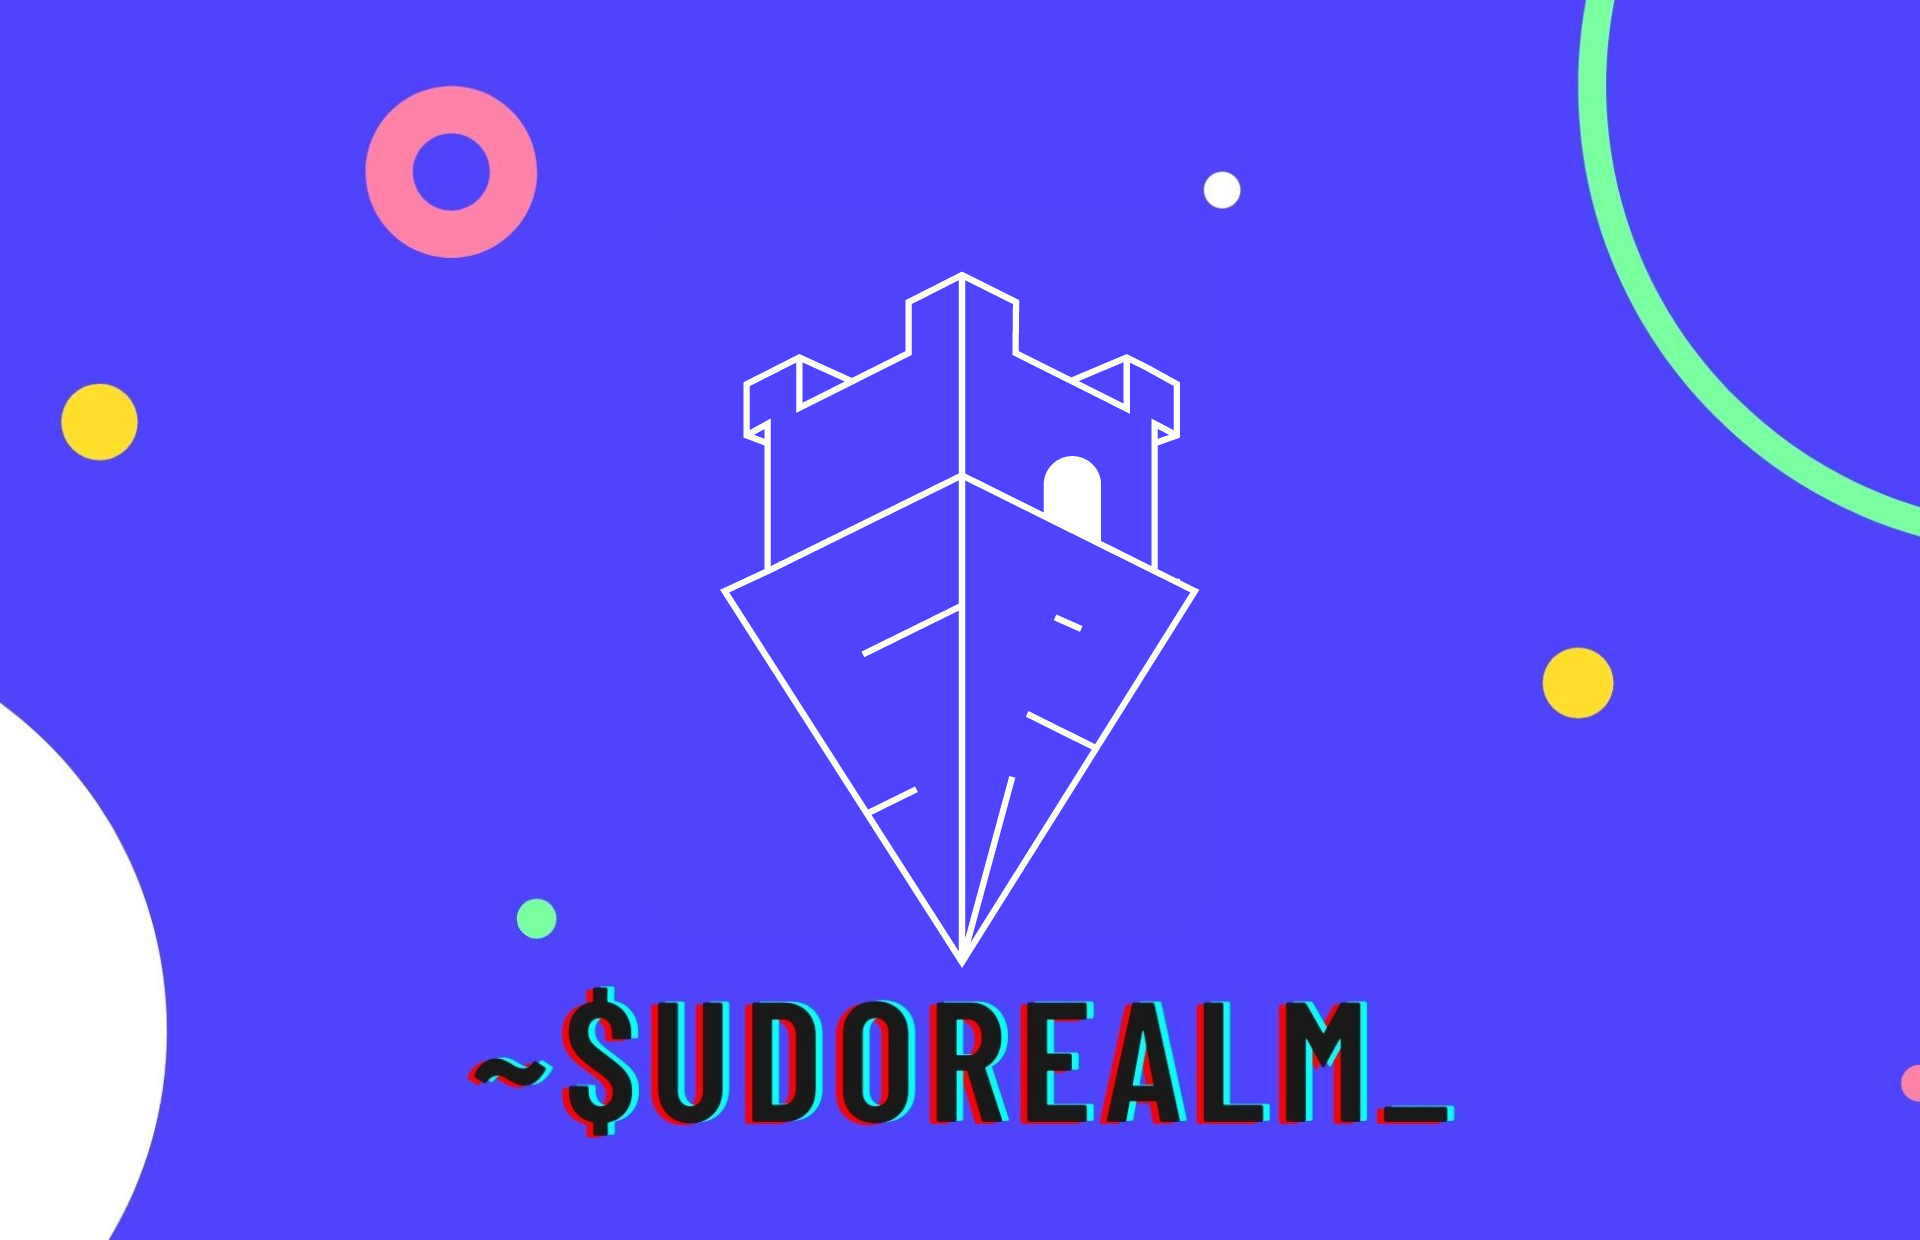 All about the sudorealm blog platform